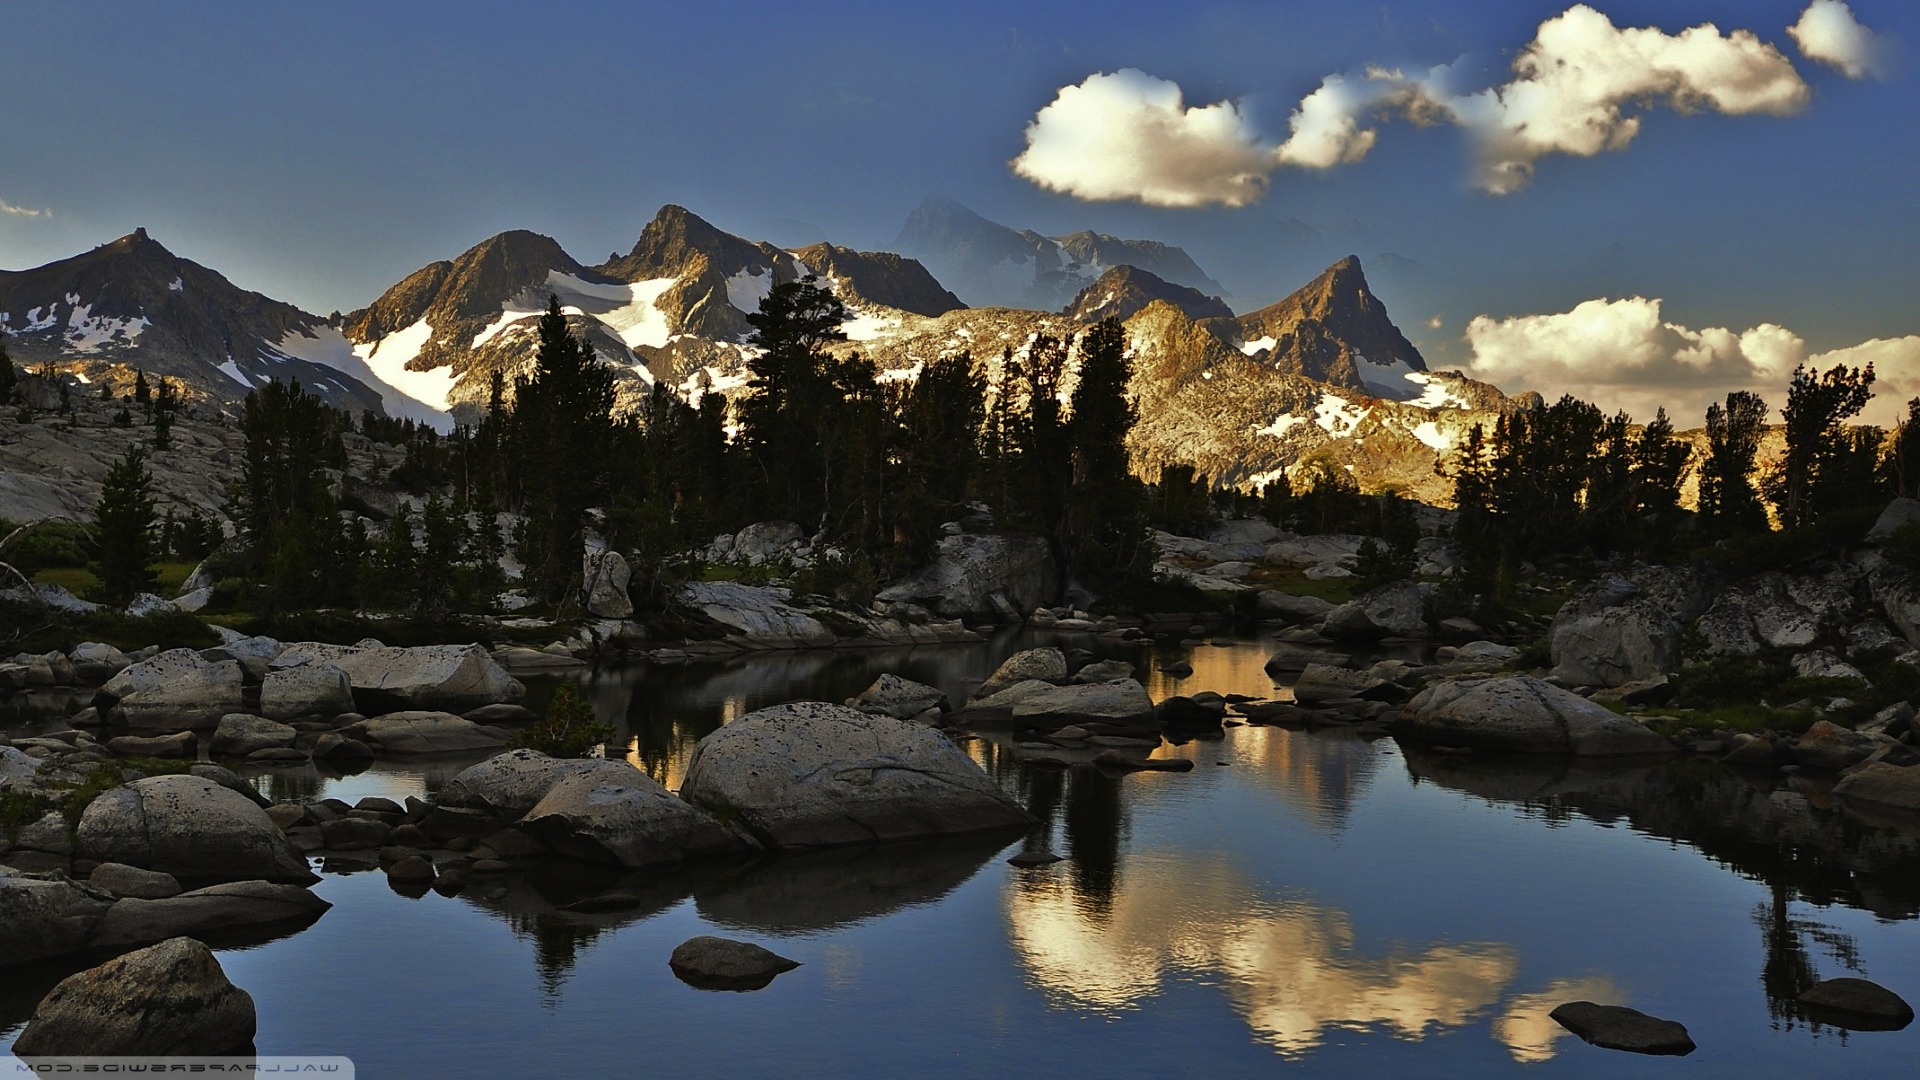 U 3315555554, The Top Of The Mountain - Golden Mountain In America - HD Wallpaper 